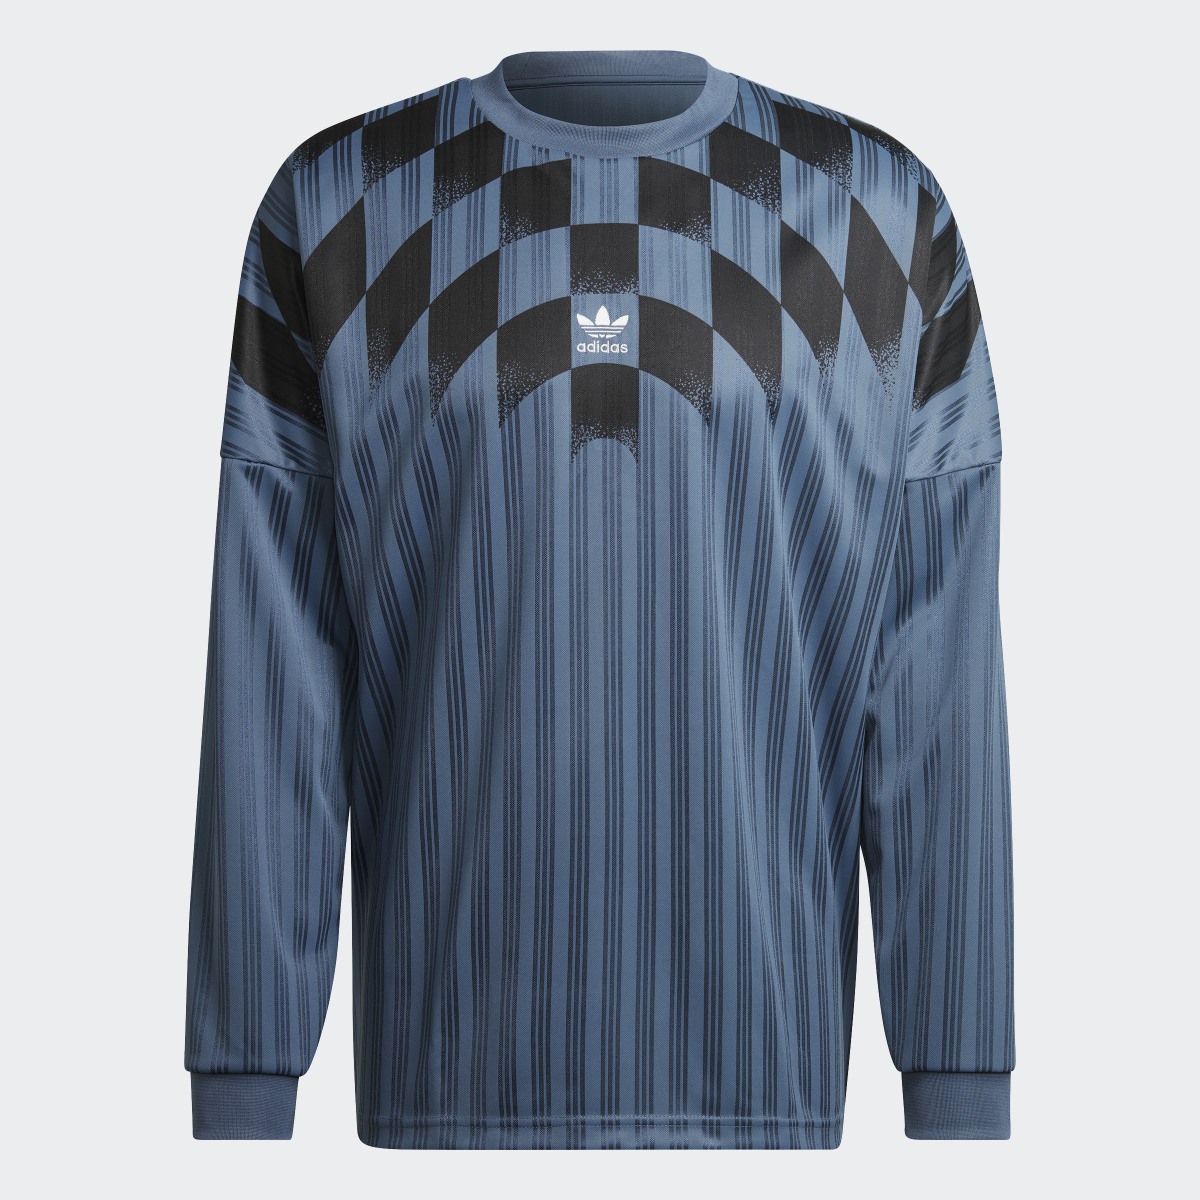 Adidas Rekive Graphic Long Sleeve Jersey. 5